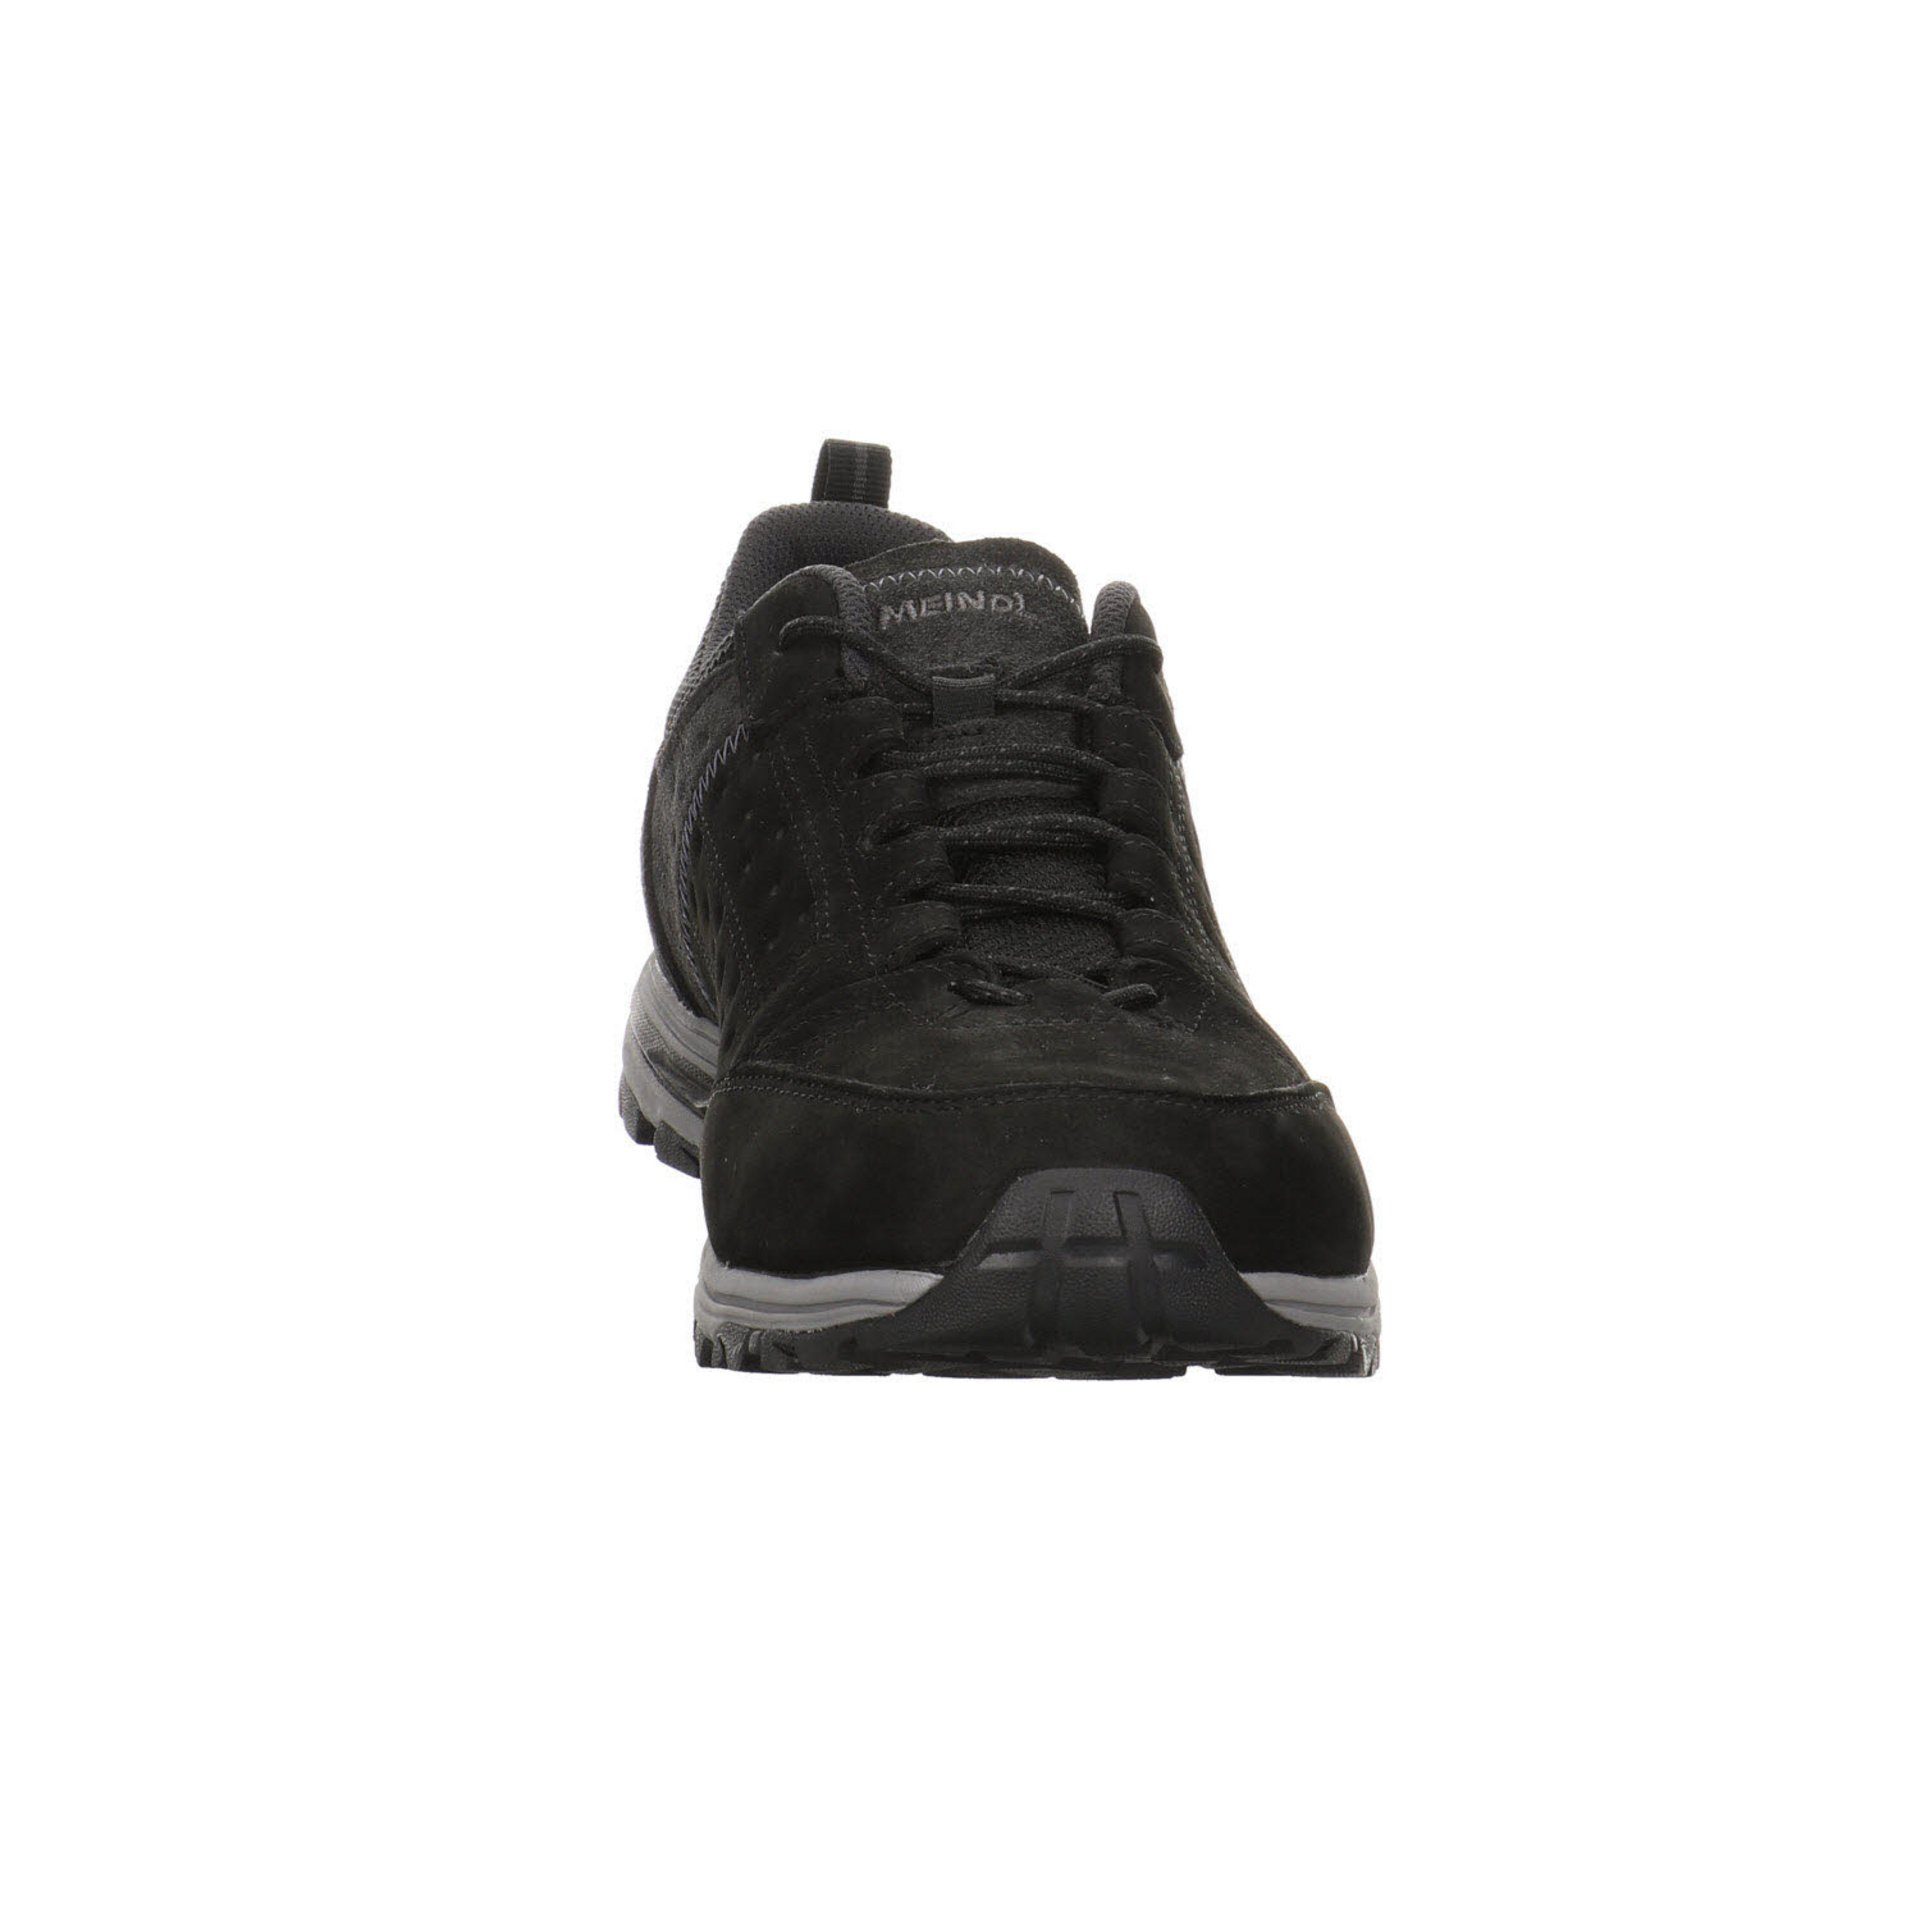 Herren schwarz Meindl Durban dunkel GTX Outdoorschuh Outdoor Schuhe Leder-/Textilkombination Outdoorschuh